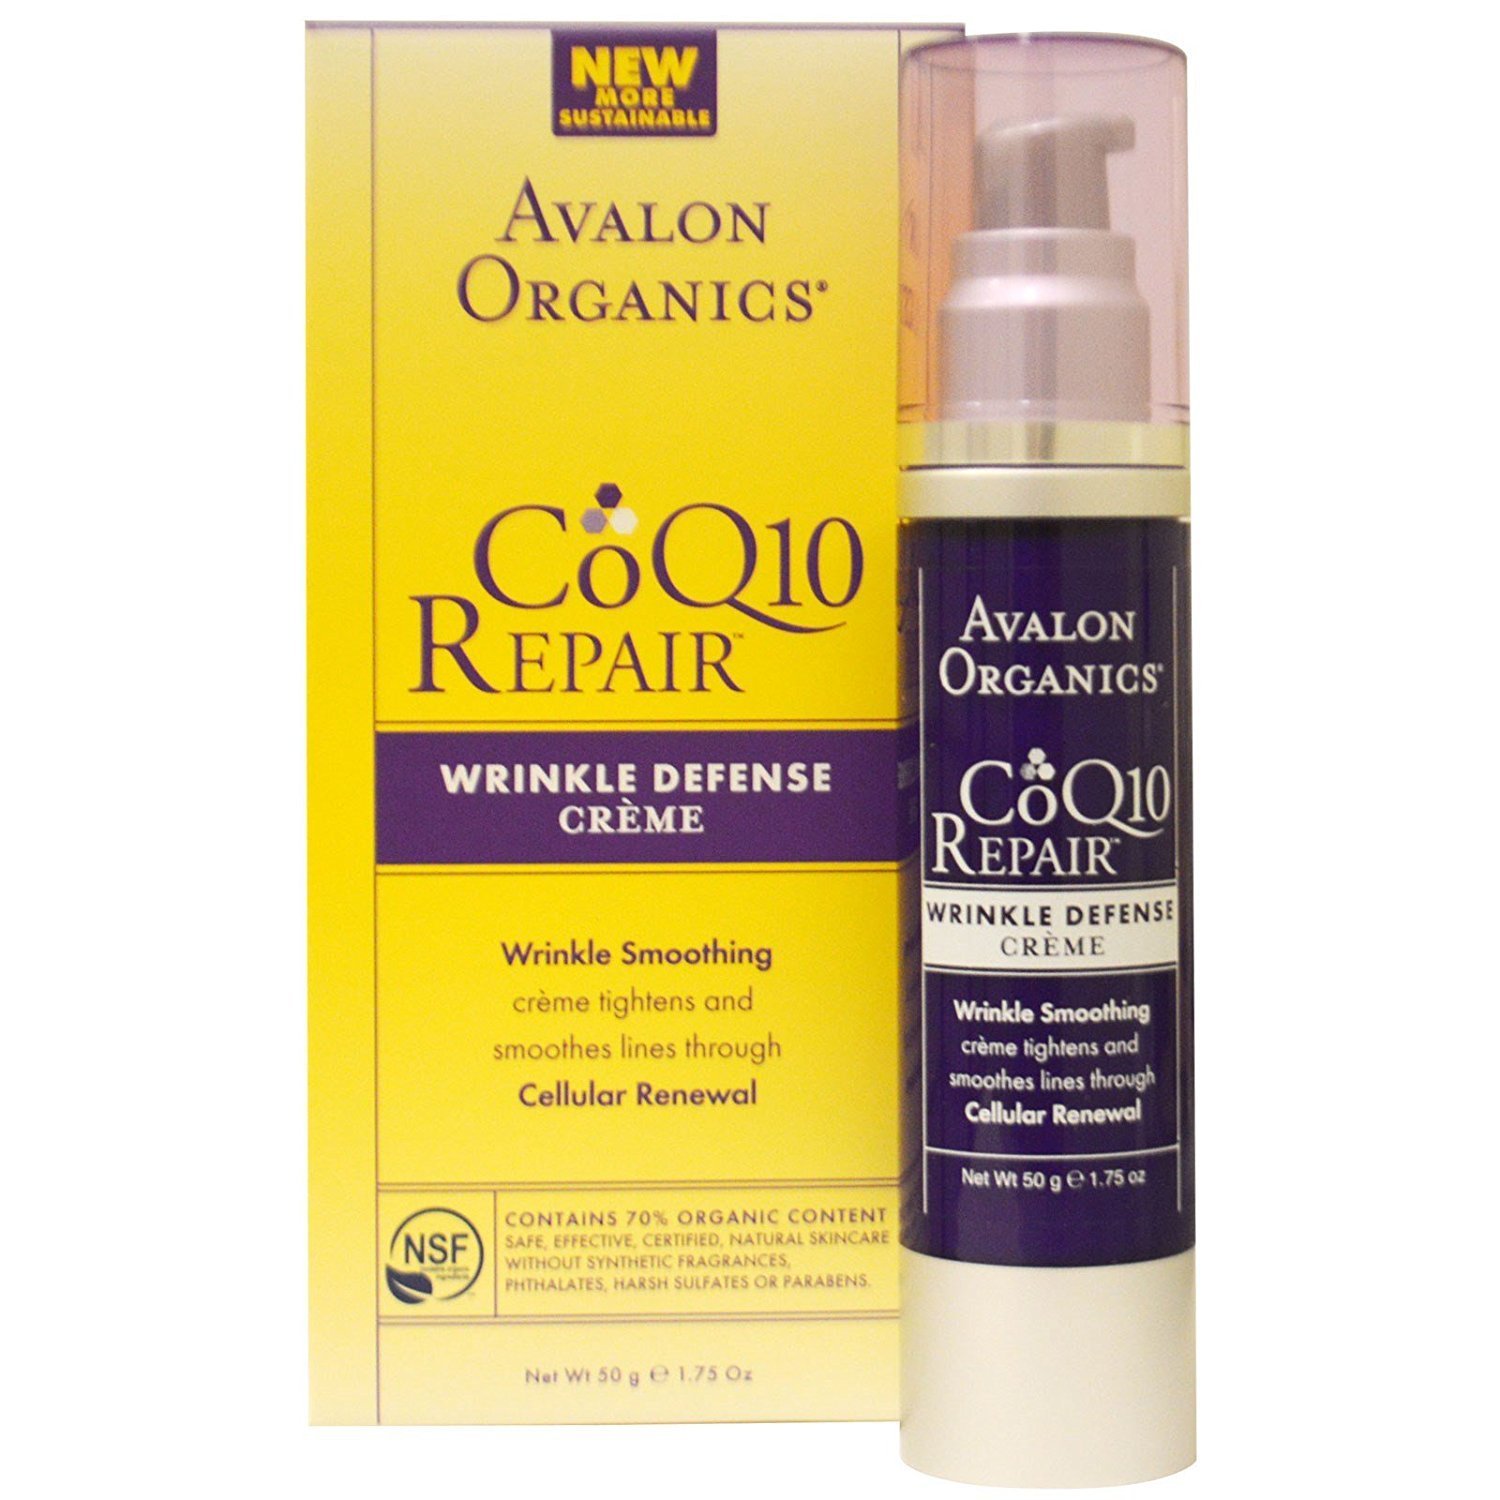 Avalon Organics Organics CoQ10 Repair Wrinkle Defense Creme Broad Spectrum SPF15 - $49.99